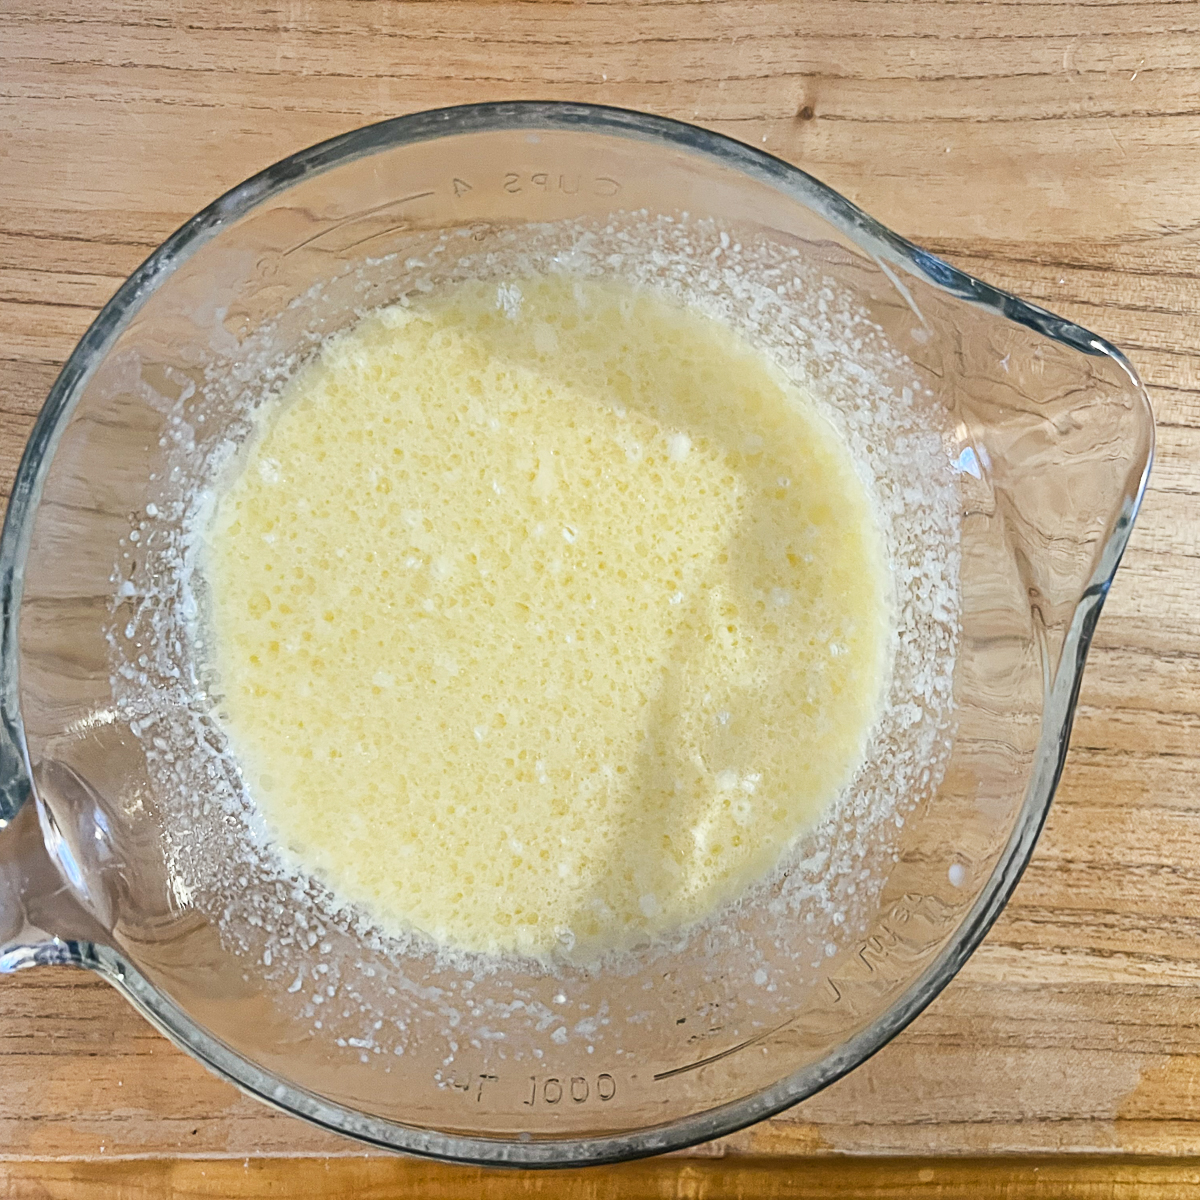 Cracker Barrel Cornbread Muffins Copycat Recipe Step 2 - mix wet ingredients